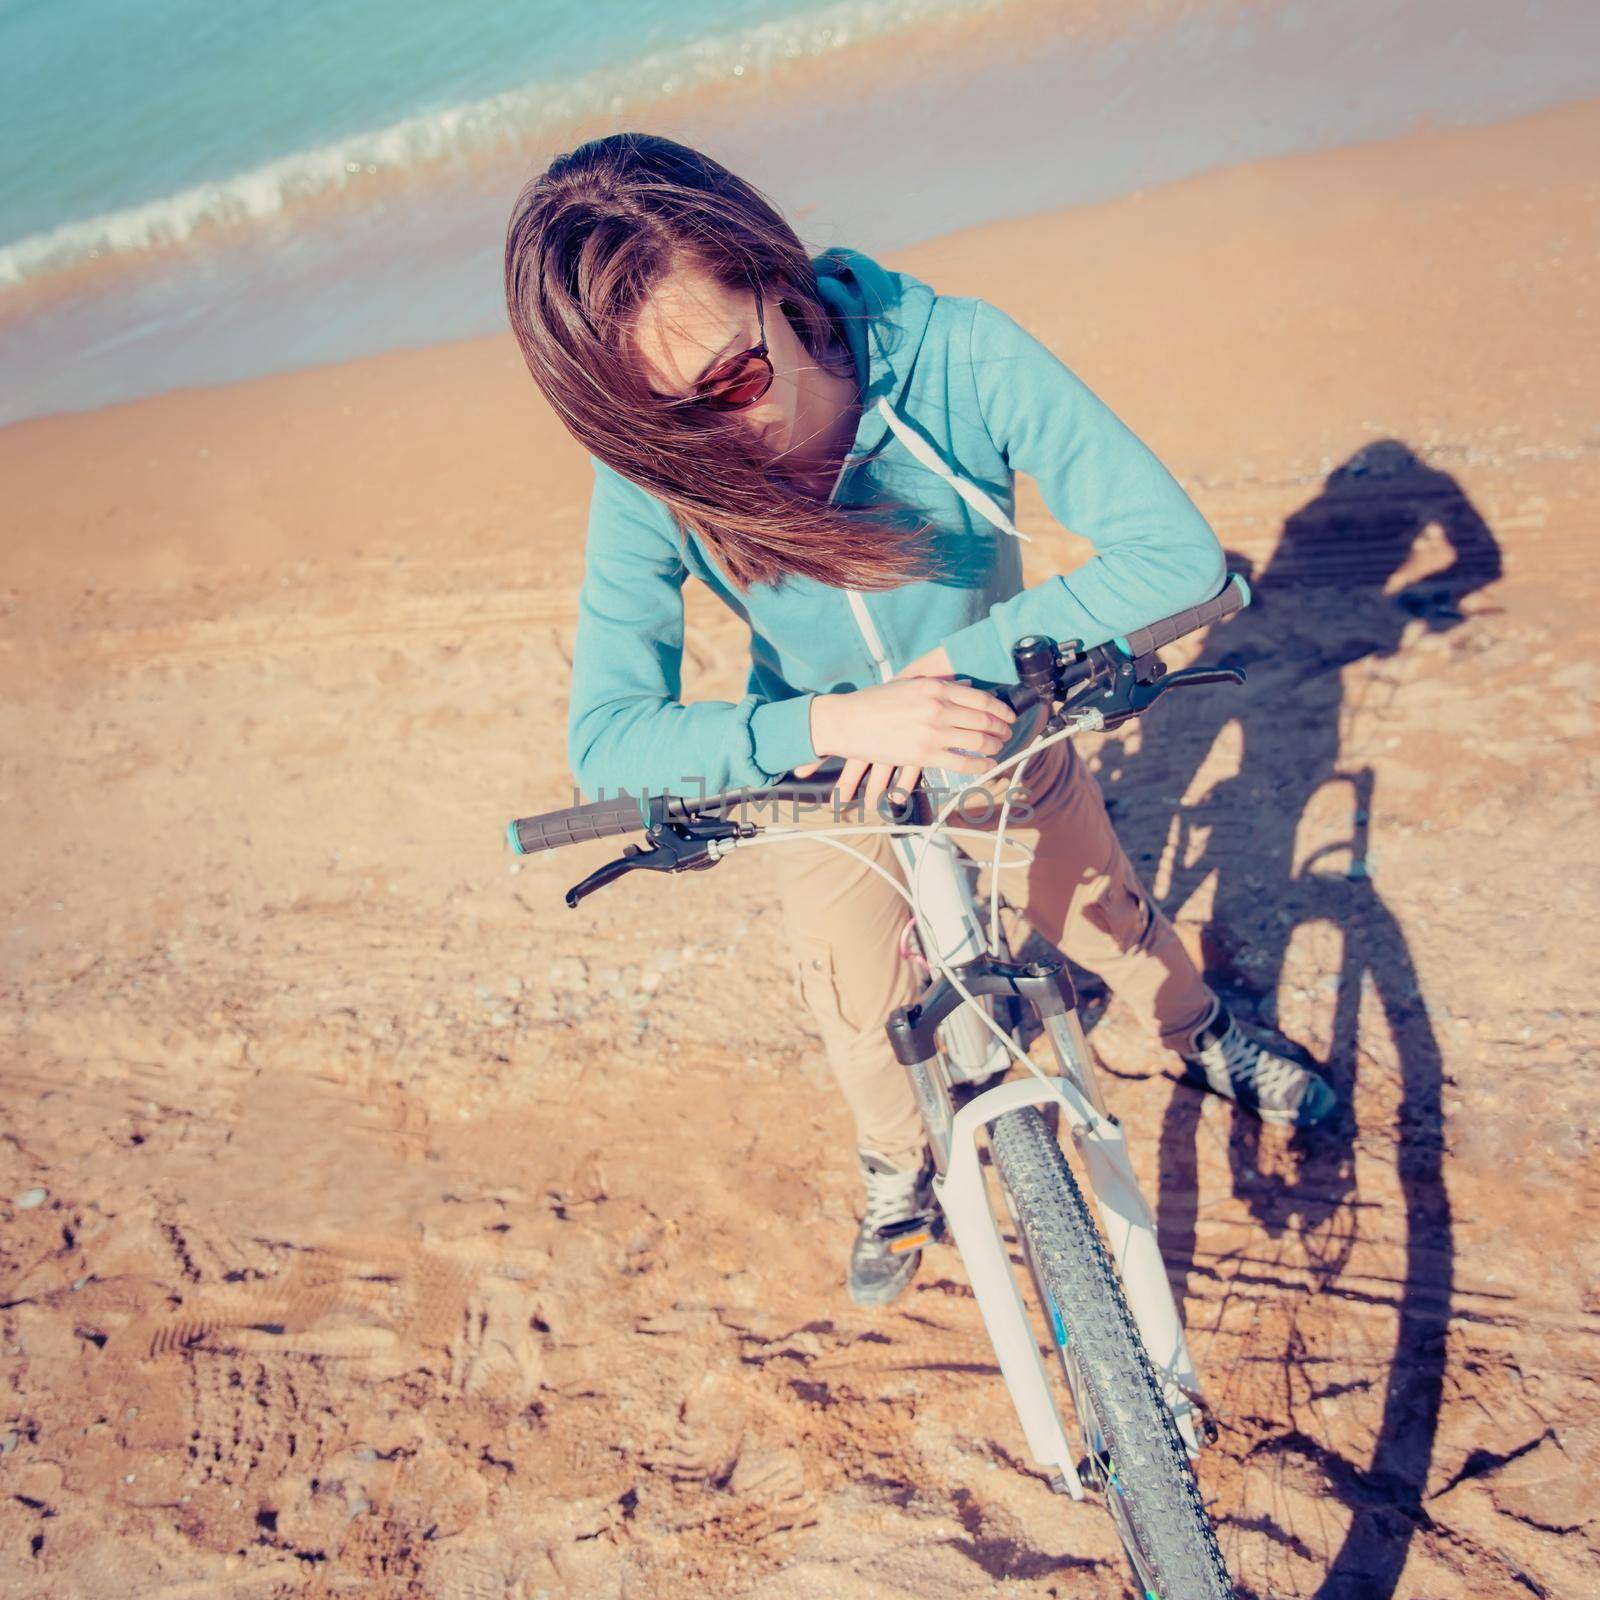 Cycling on beach in summer by alexAleksei